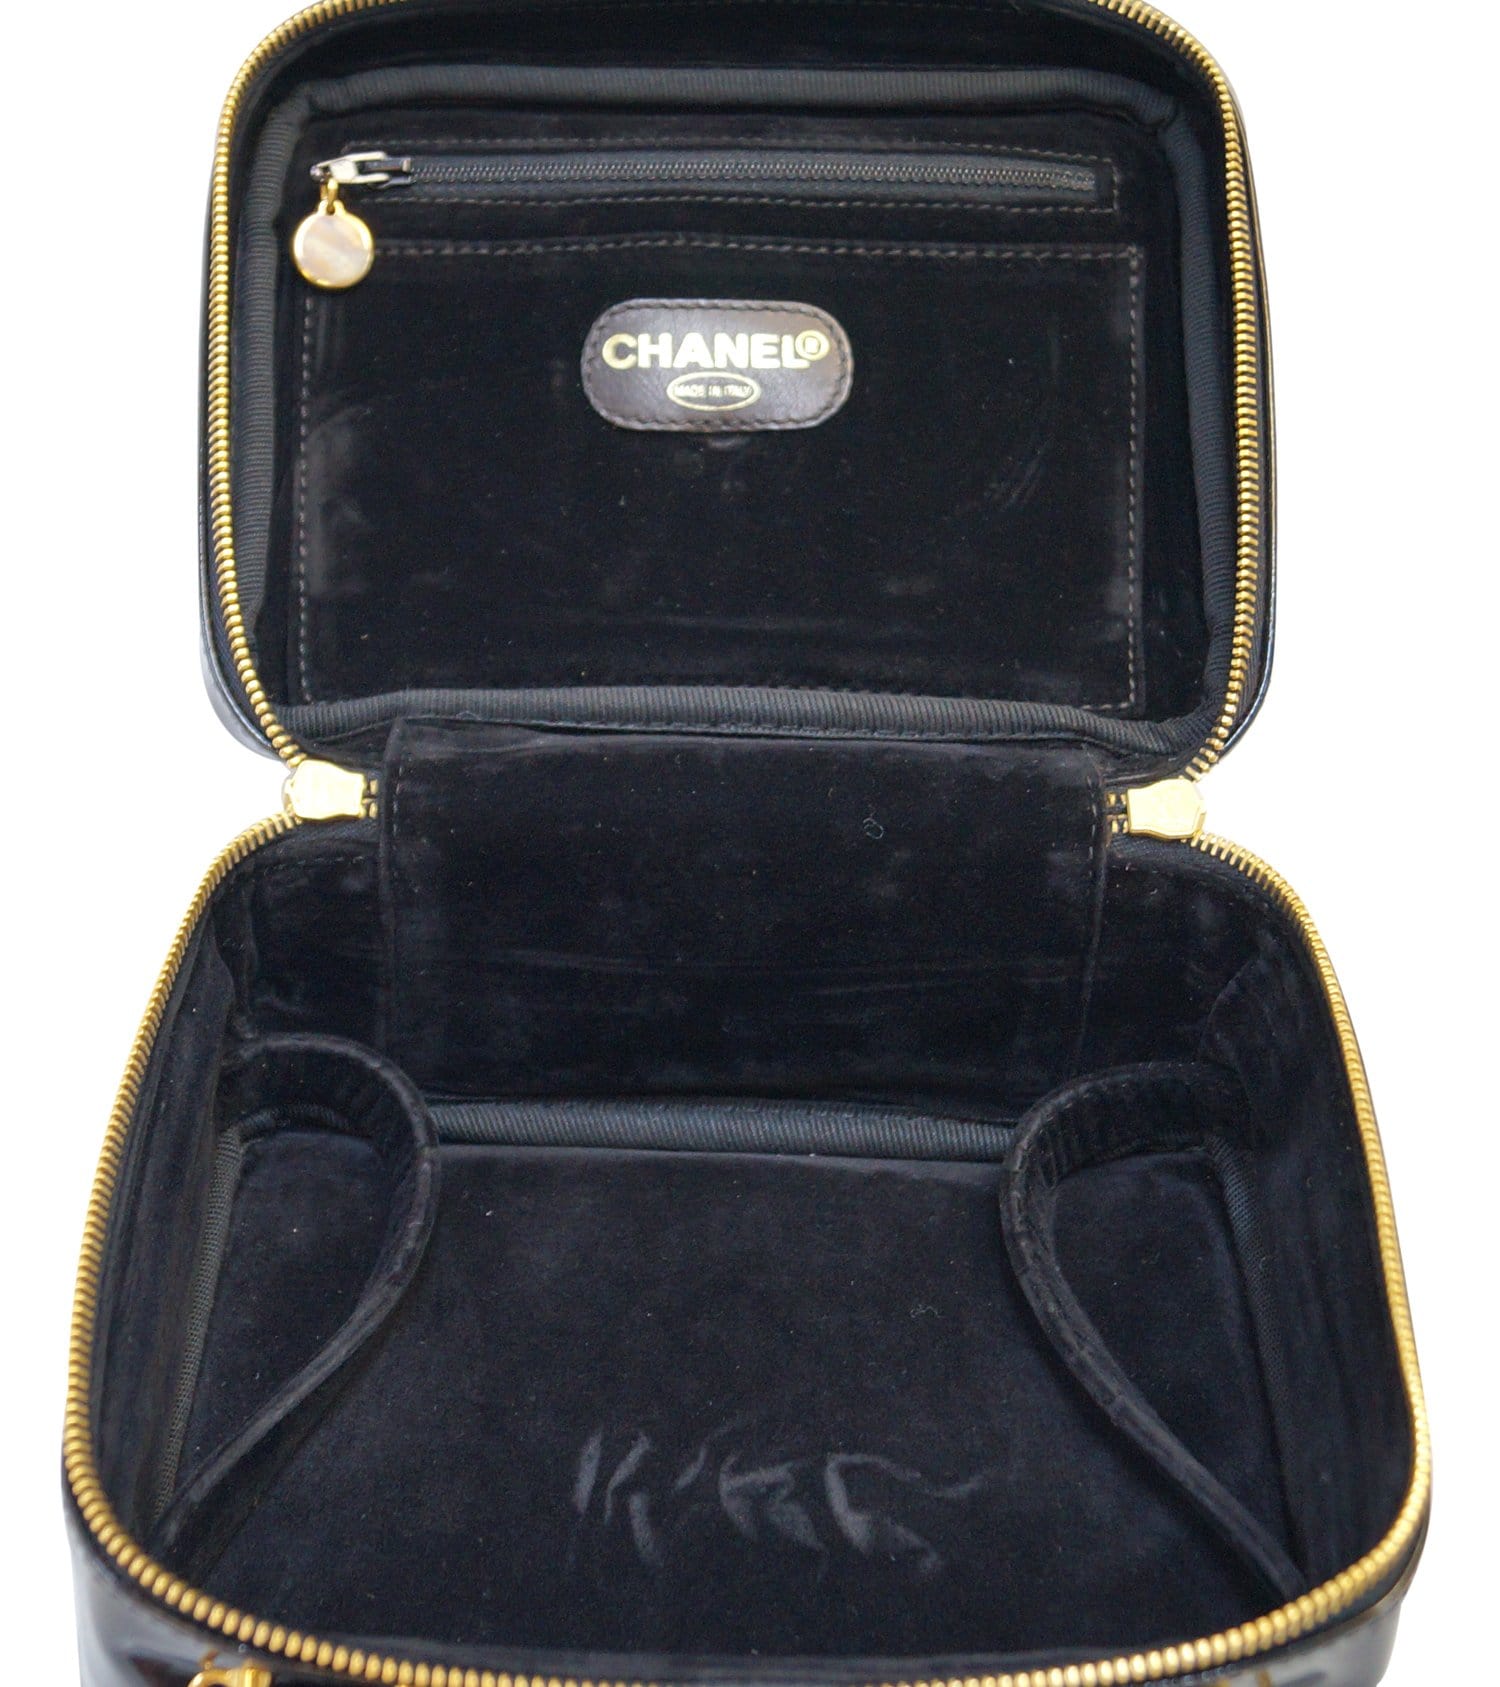 Chanel Patent Leather Mini Vanity Bag